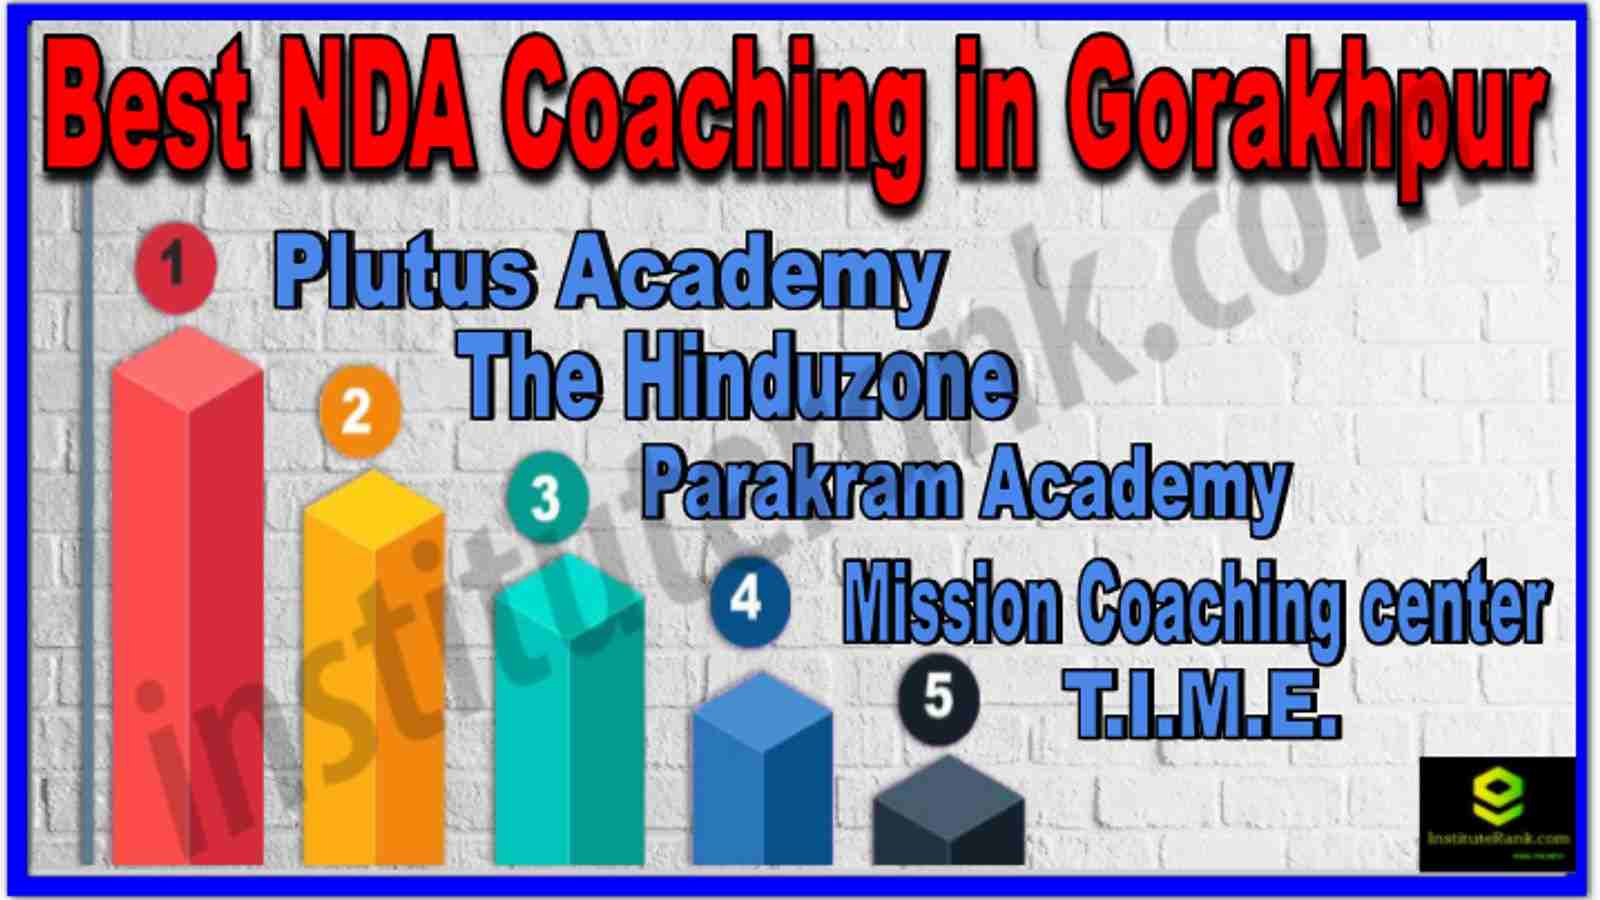 Best NDA Coaching in Gorakhpur